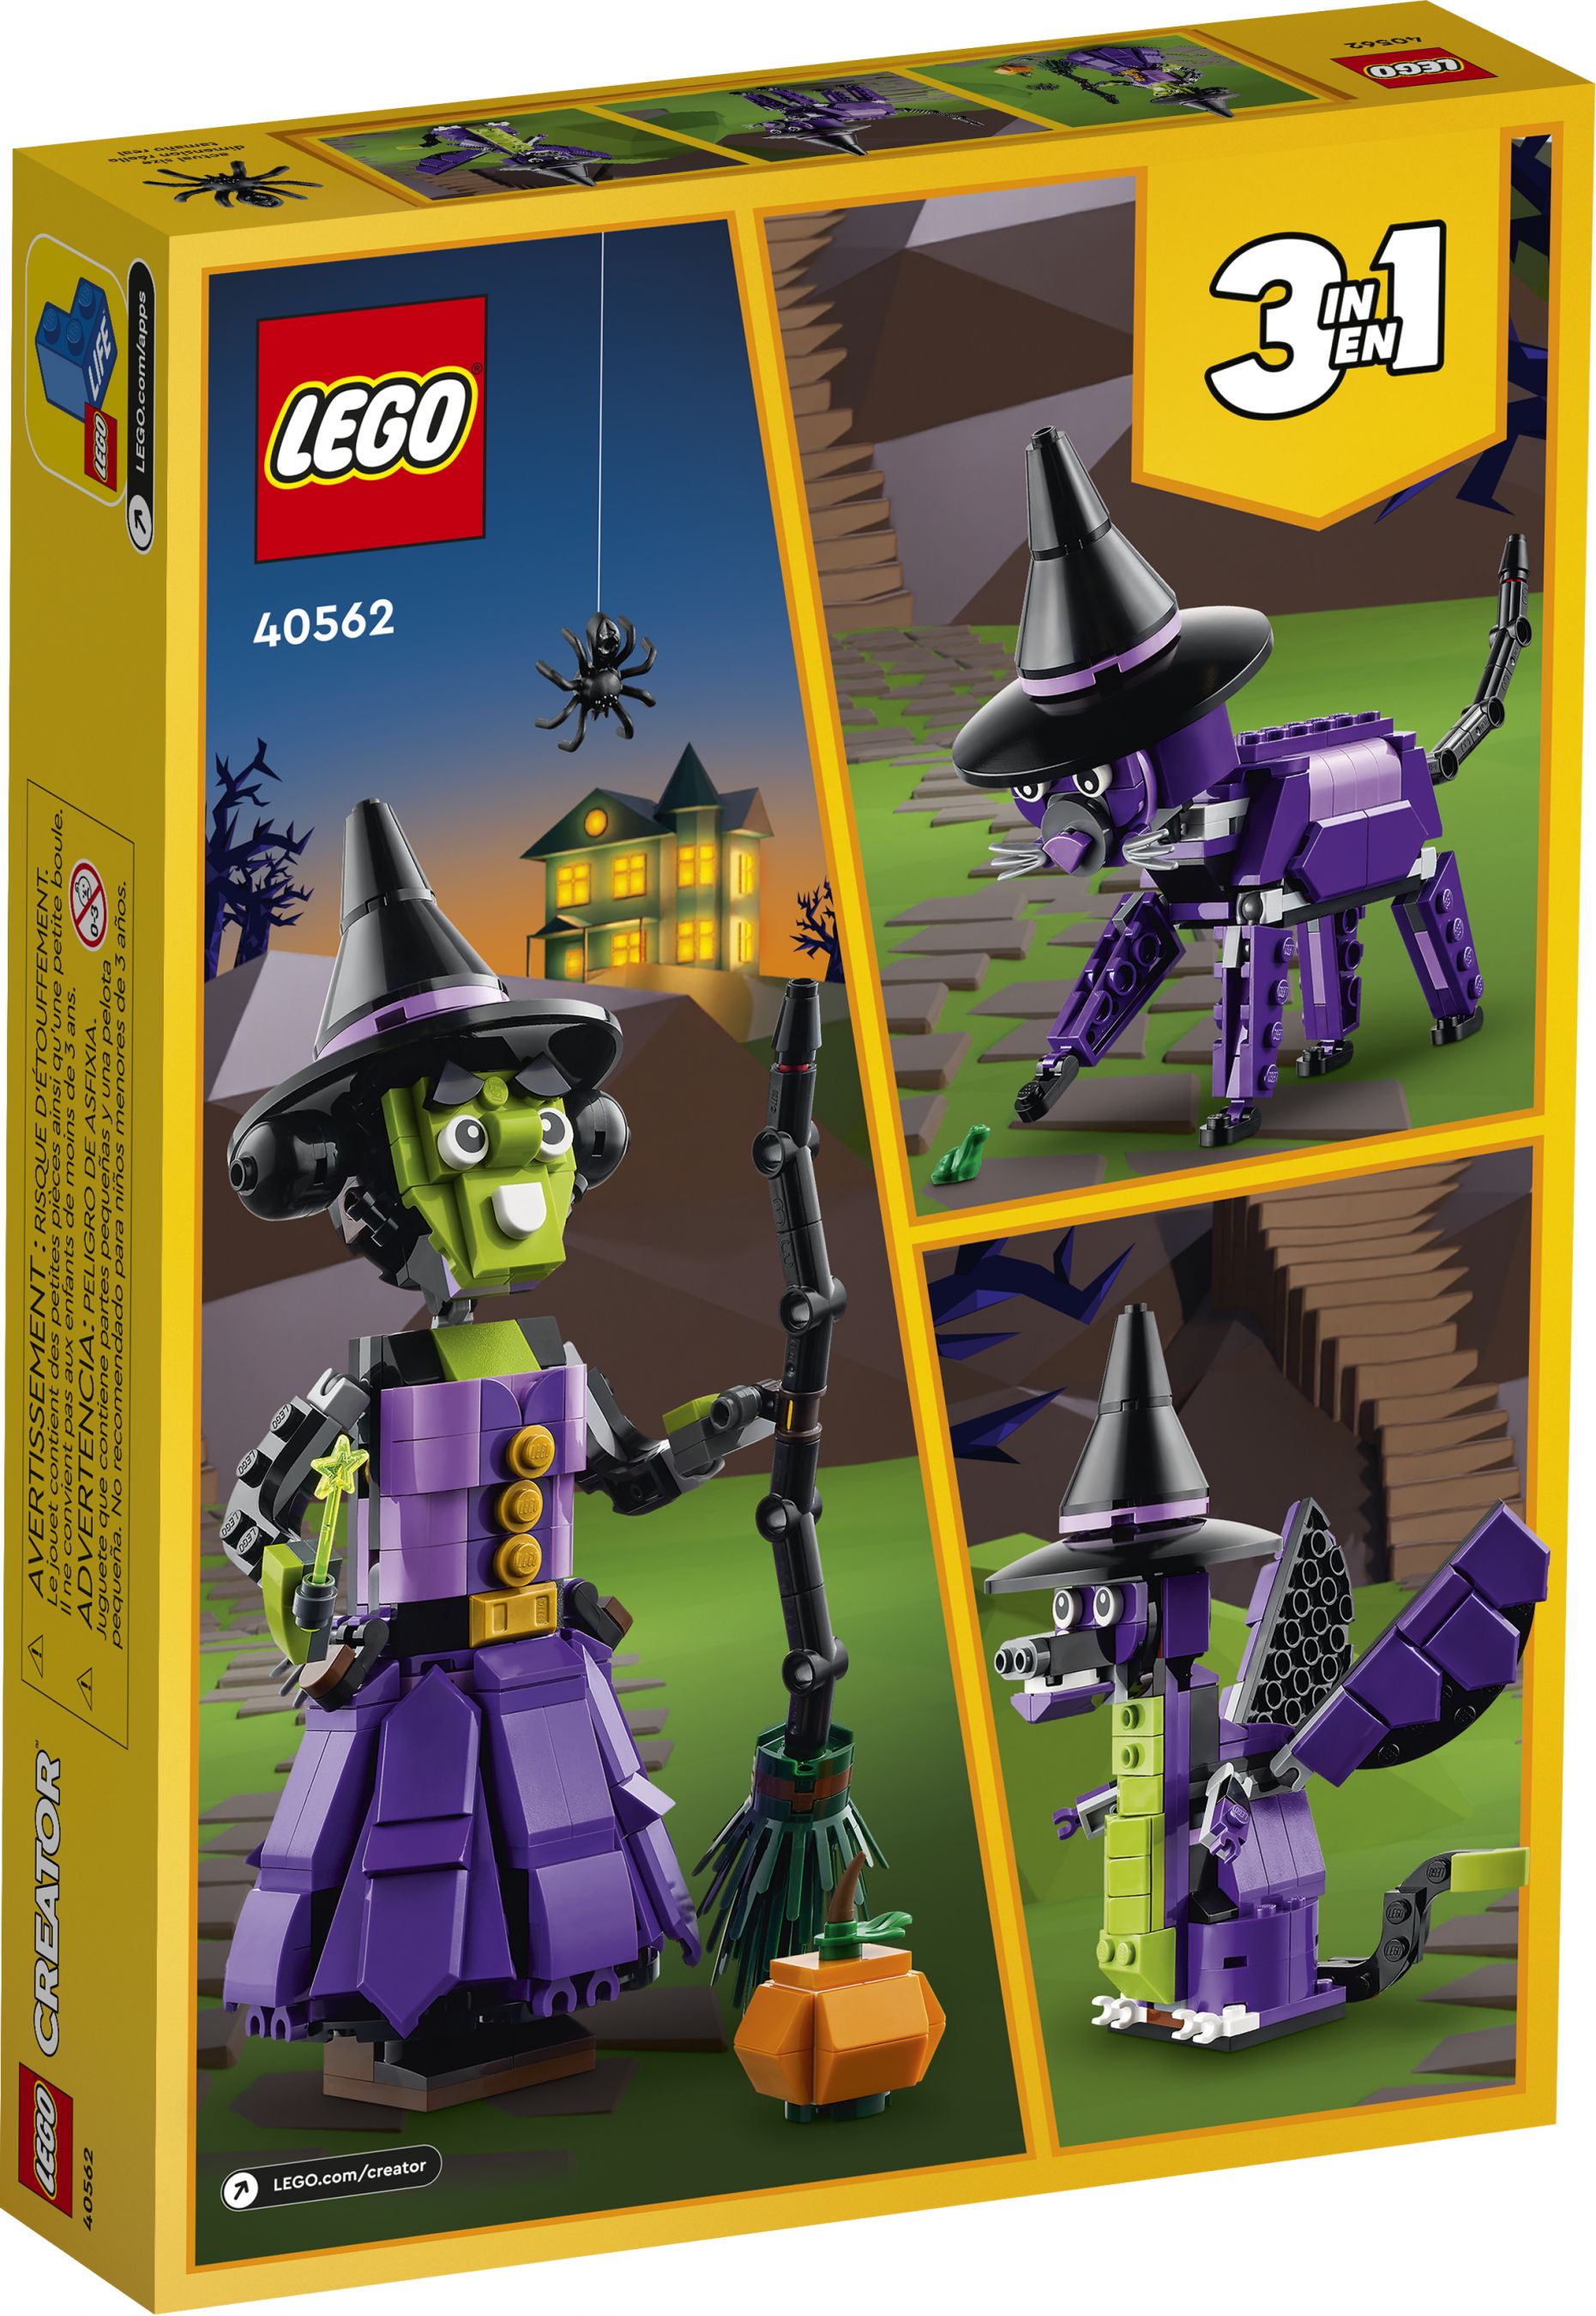 LEGO Promotional 40562 Geheimnisvolle Hexe LEGO_40562_alt2.jpg